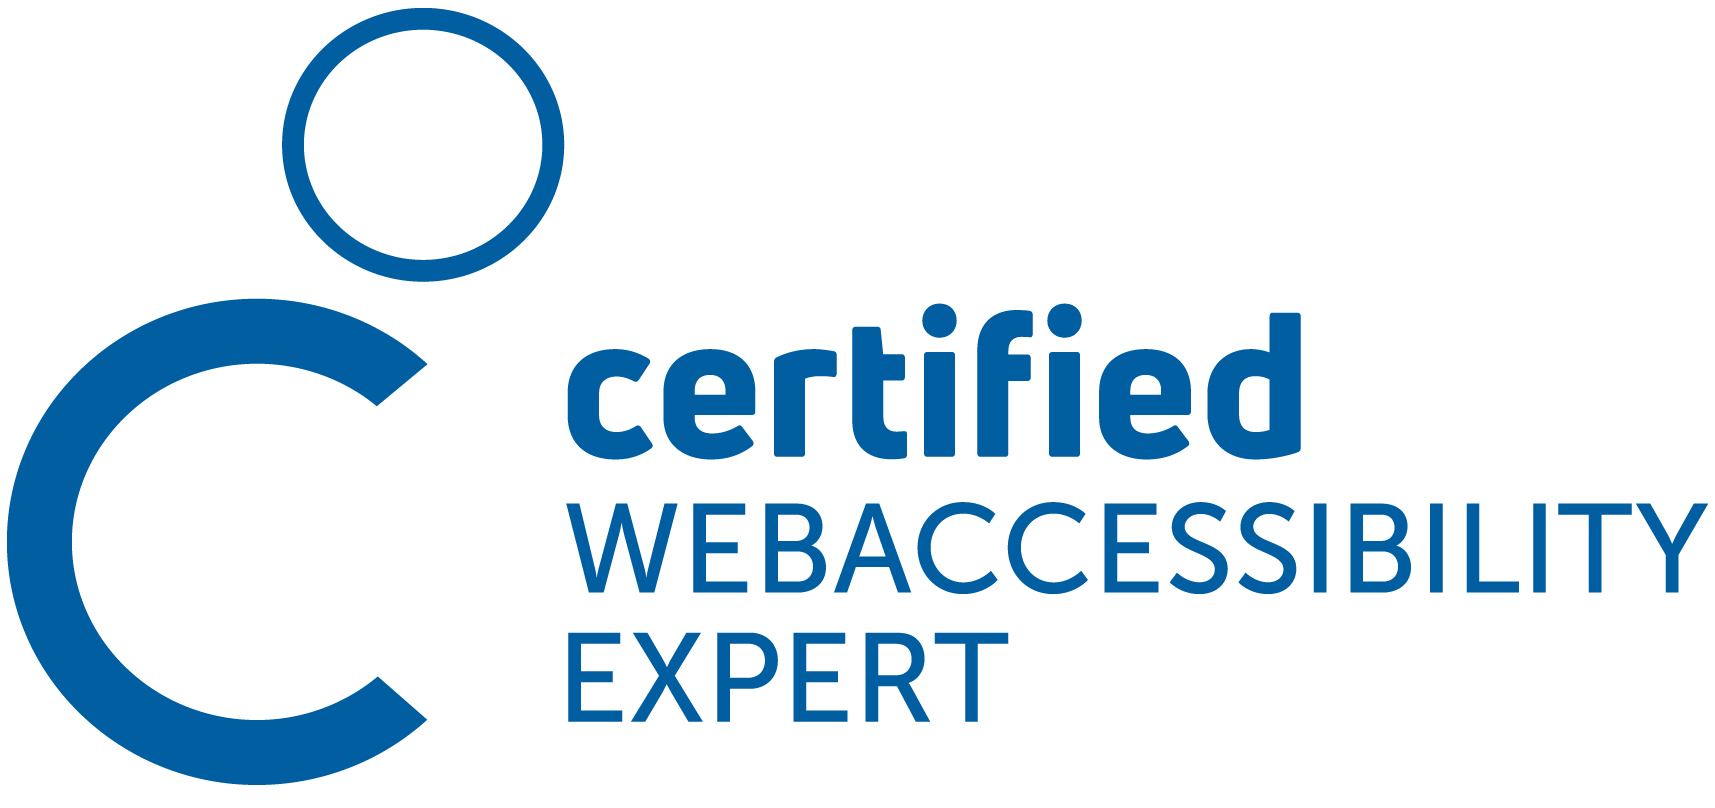 webaccessibility_expert